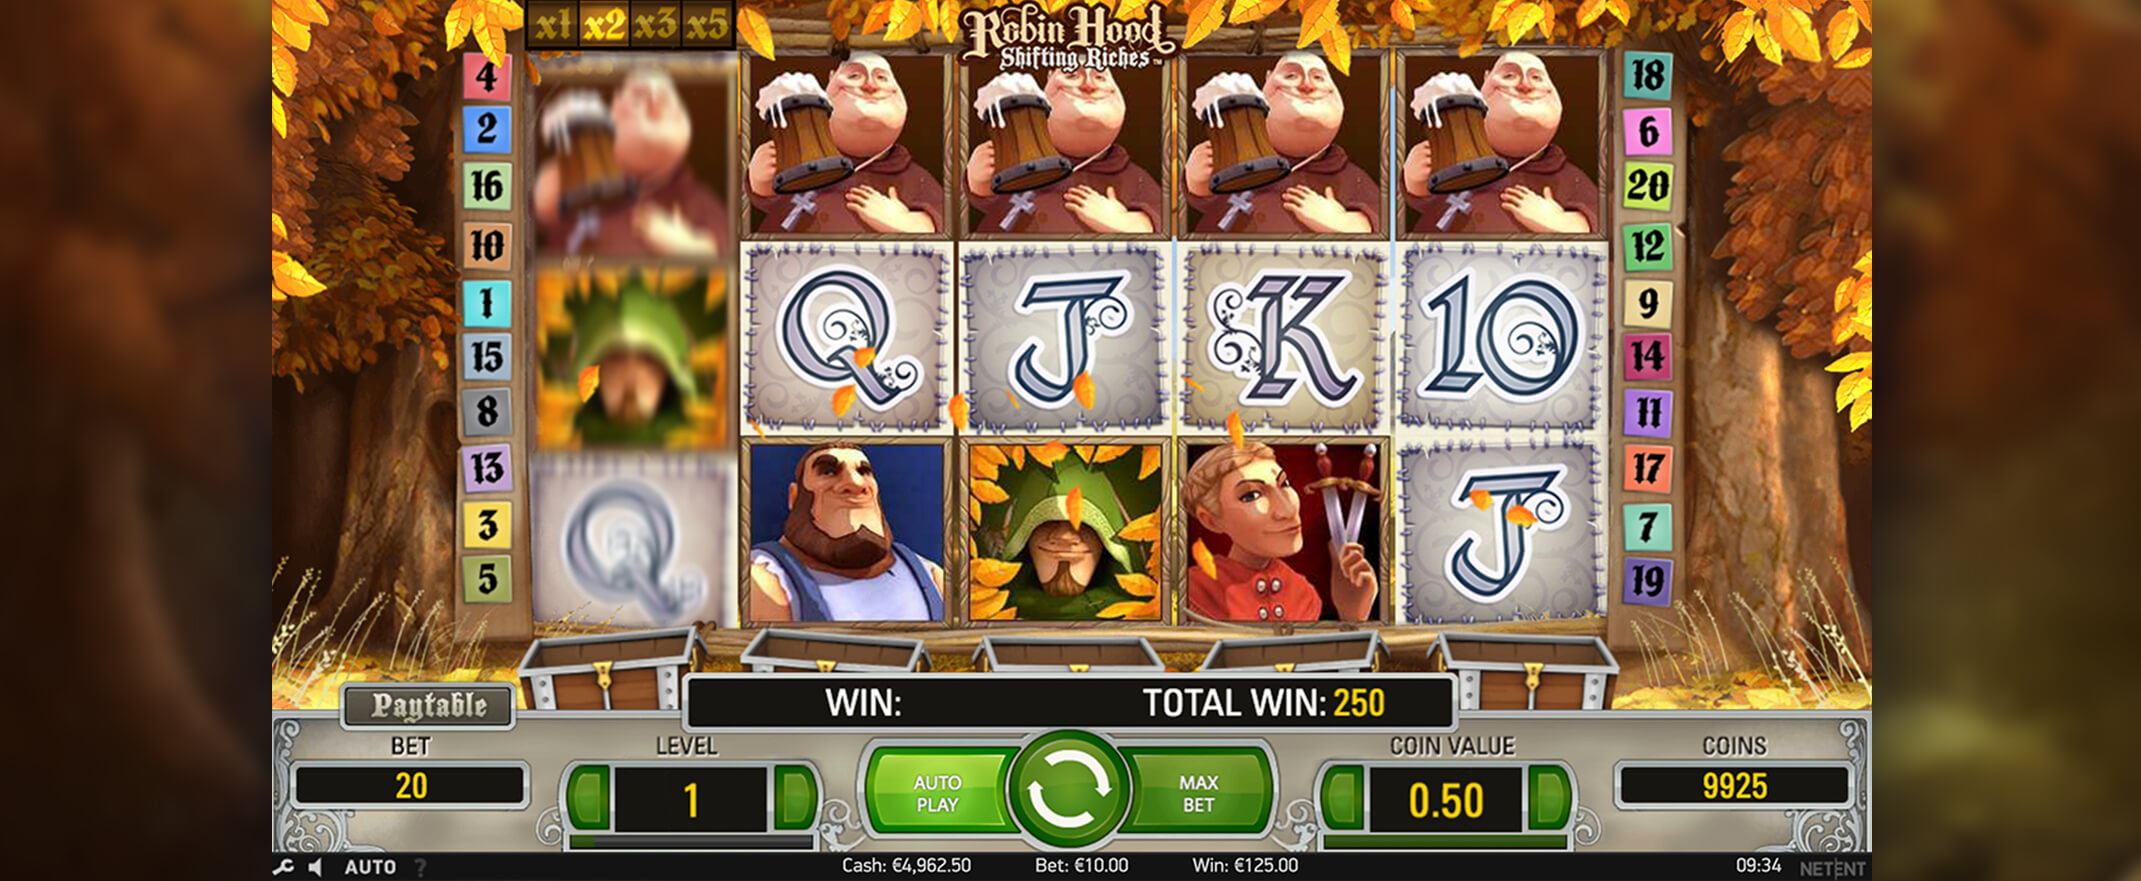 Robin Hood: Shifting Riches es un sitio web sobre casinos. Captura de pantalla